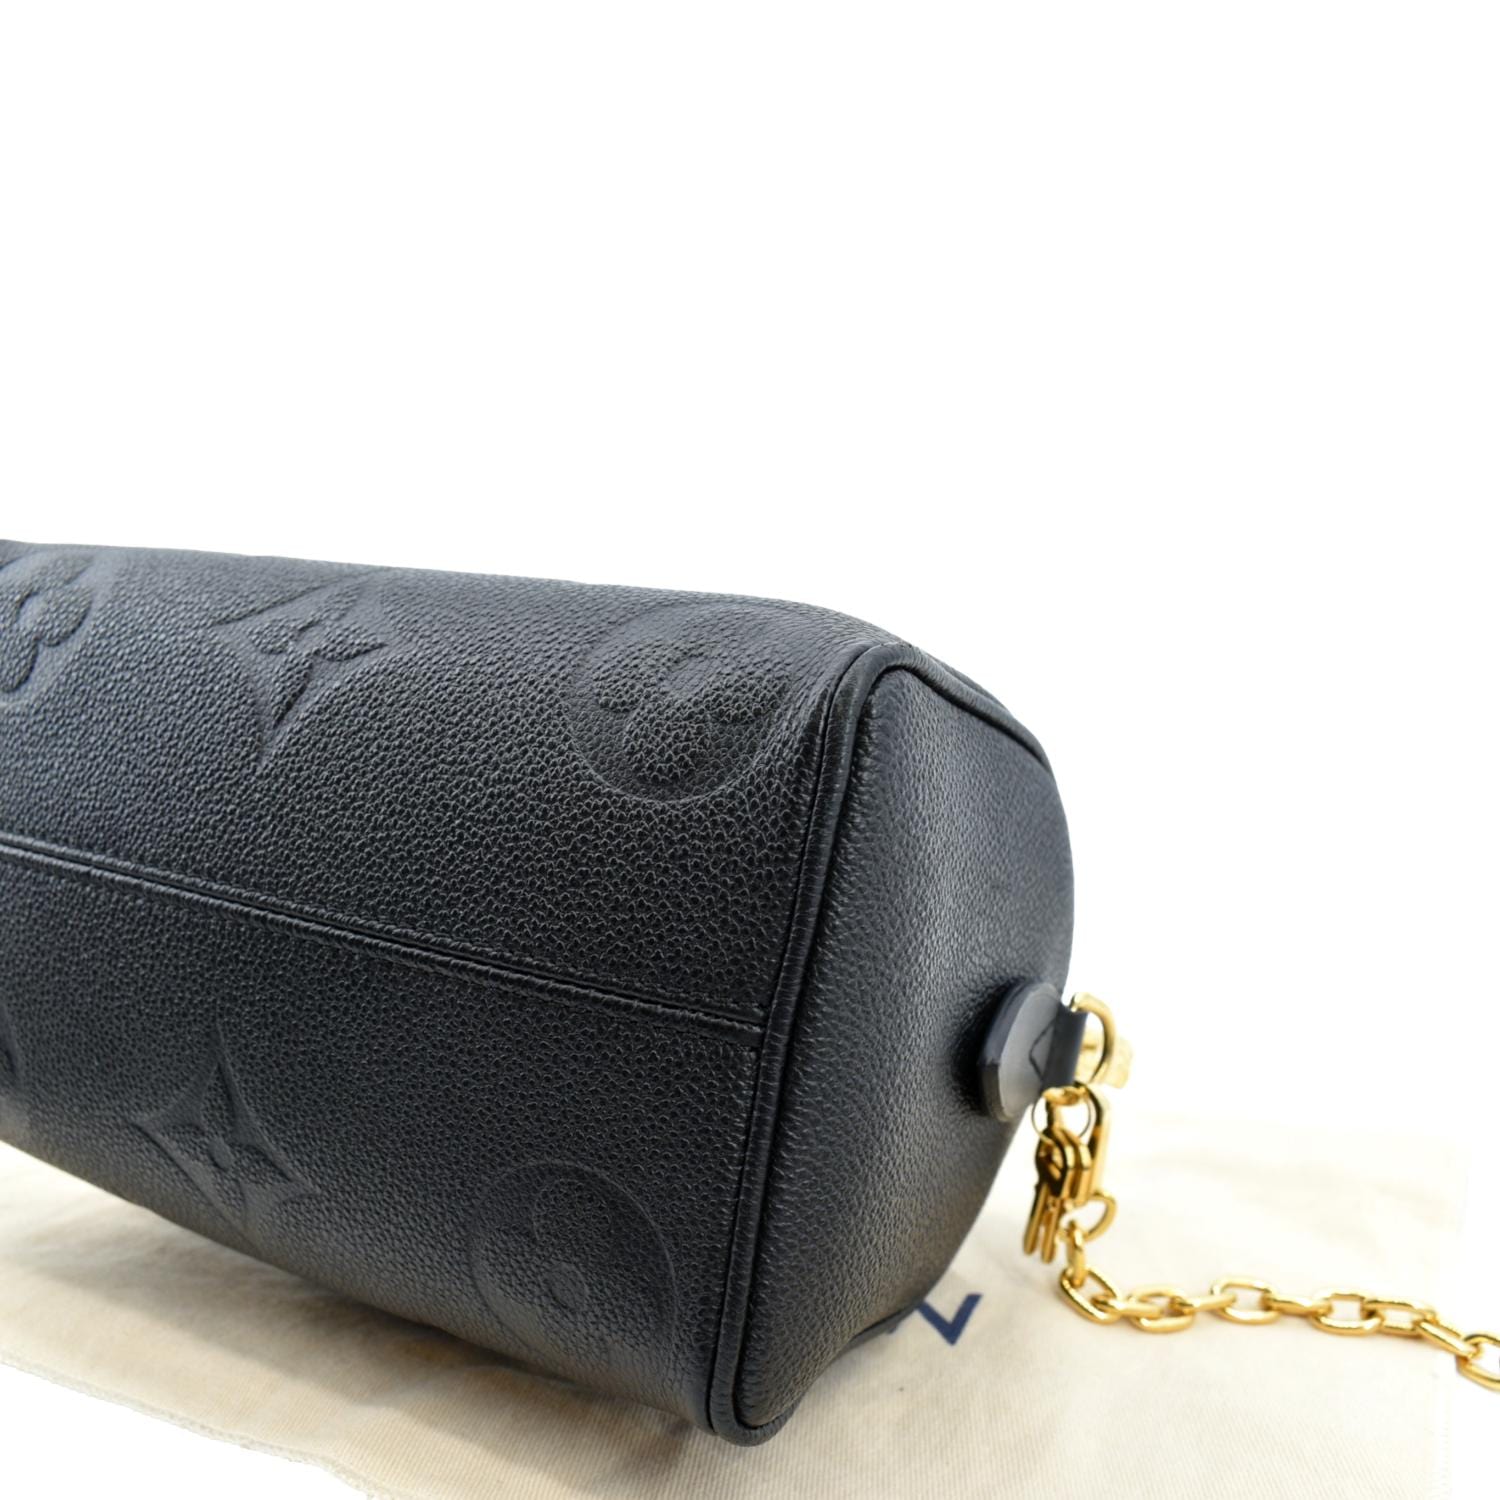 Louis Vuitton Speedy 20 Bag With Shoulder Strap Black Embossed